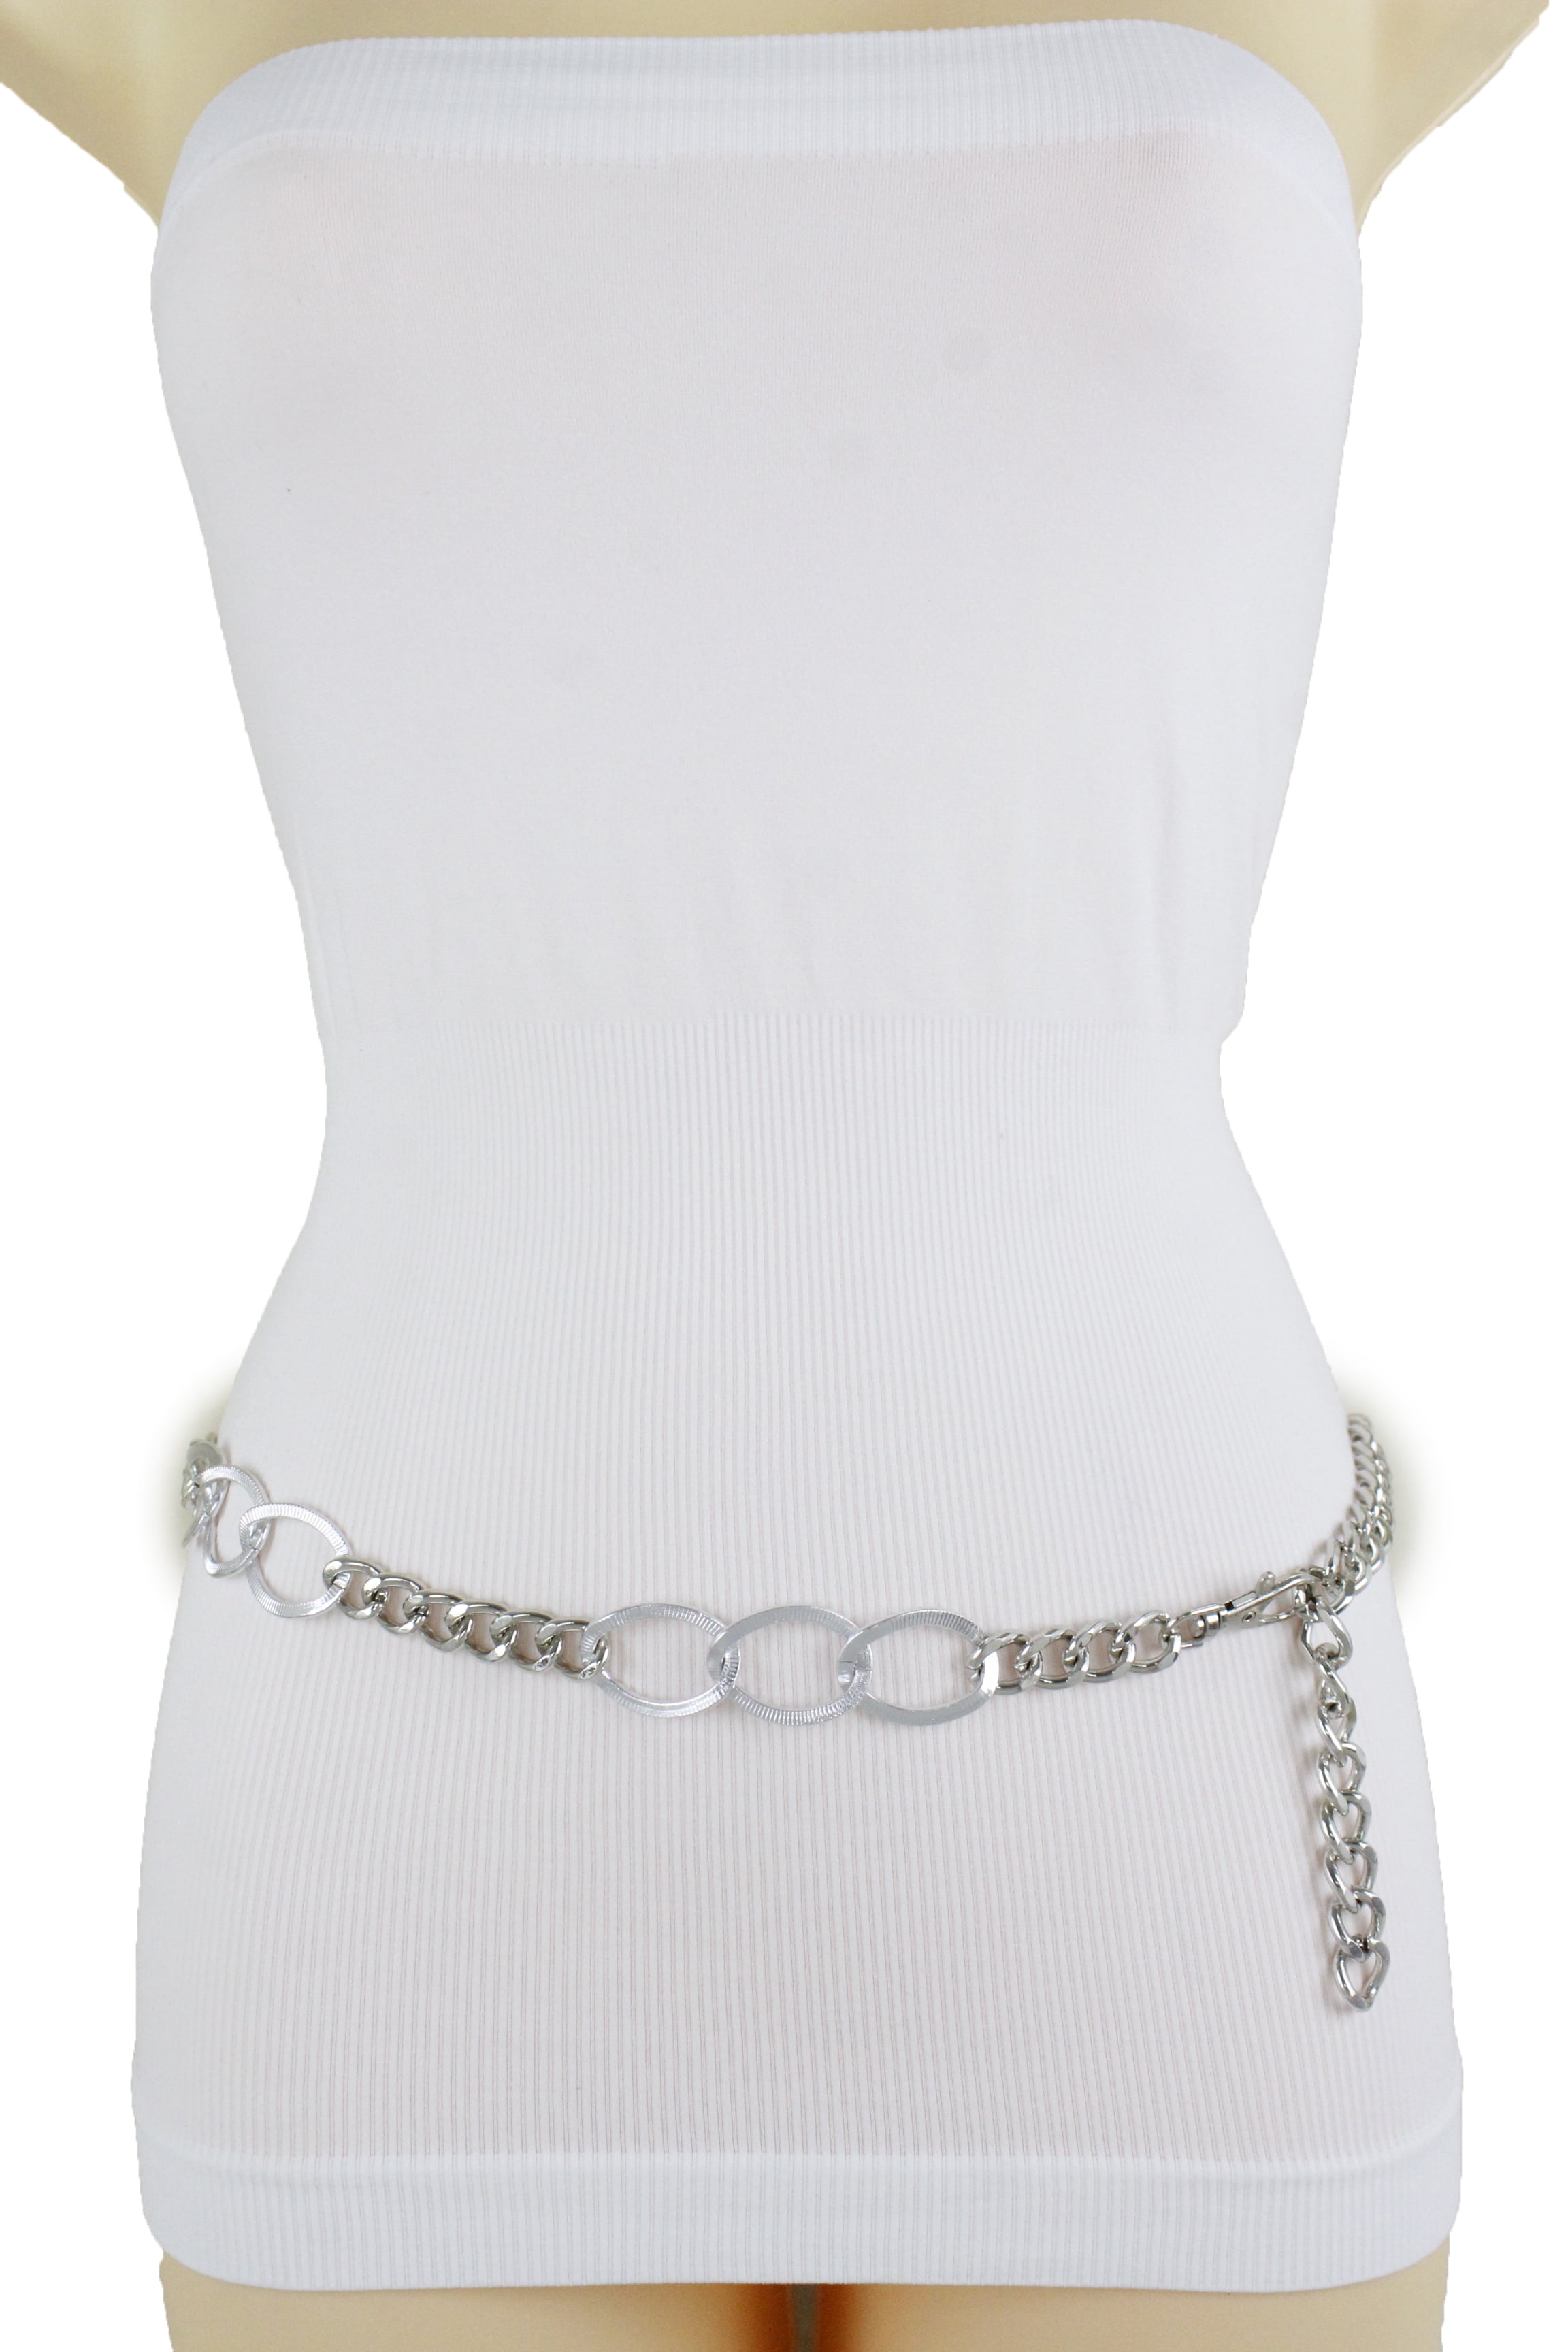 Women Silver Metal Chain Link Trendy Dress Up Belt Lion Charm Buckle Size M L XL 